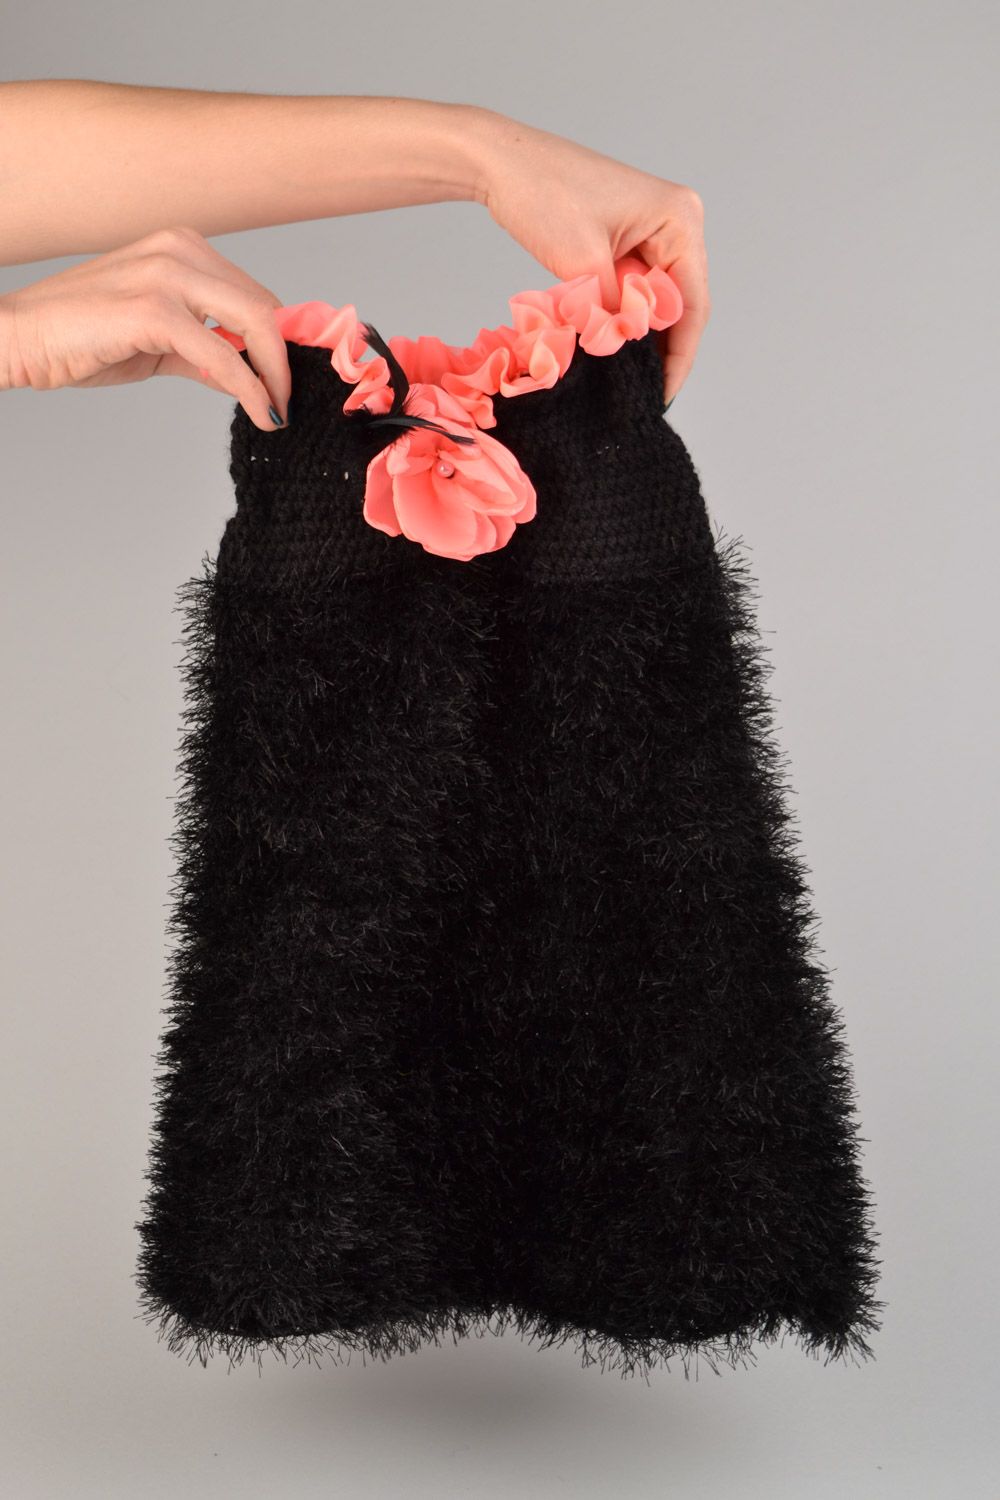 Handmade black dress crocheted of acrylic threads with silk flower for baby girl photo 1